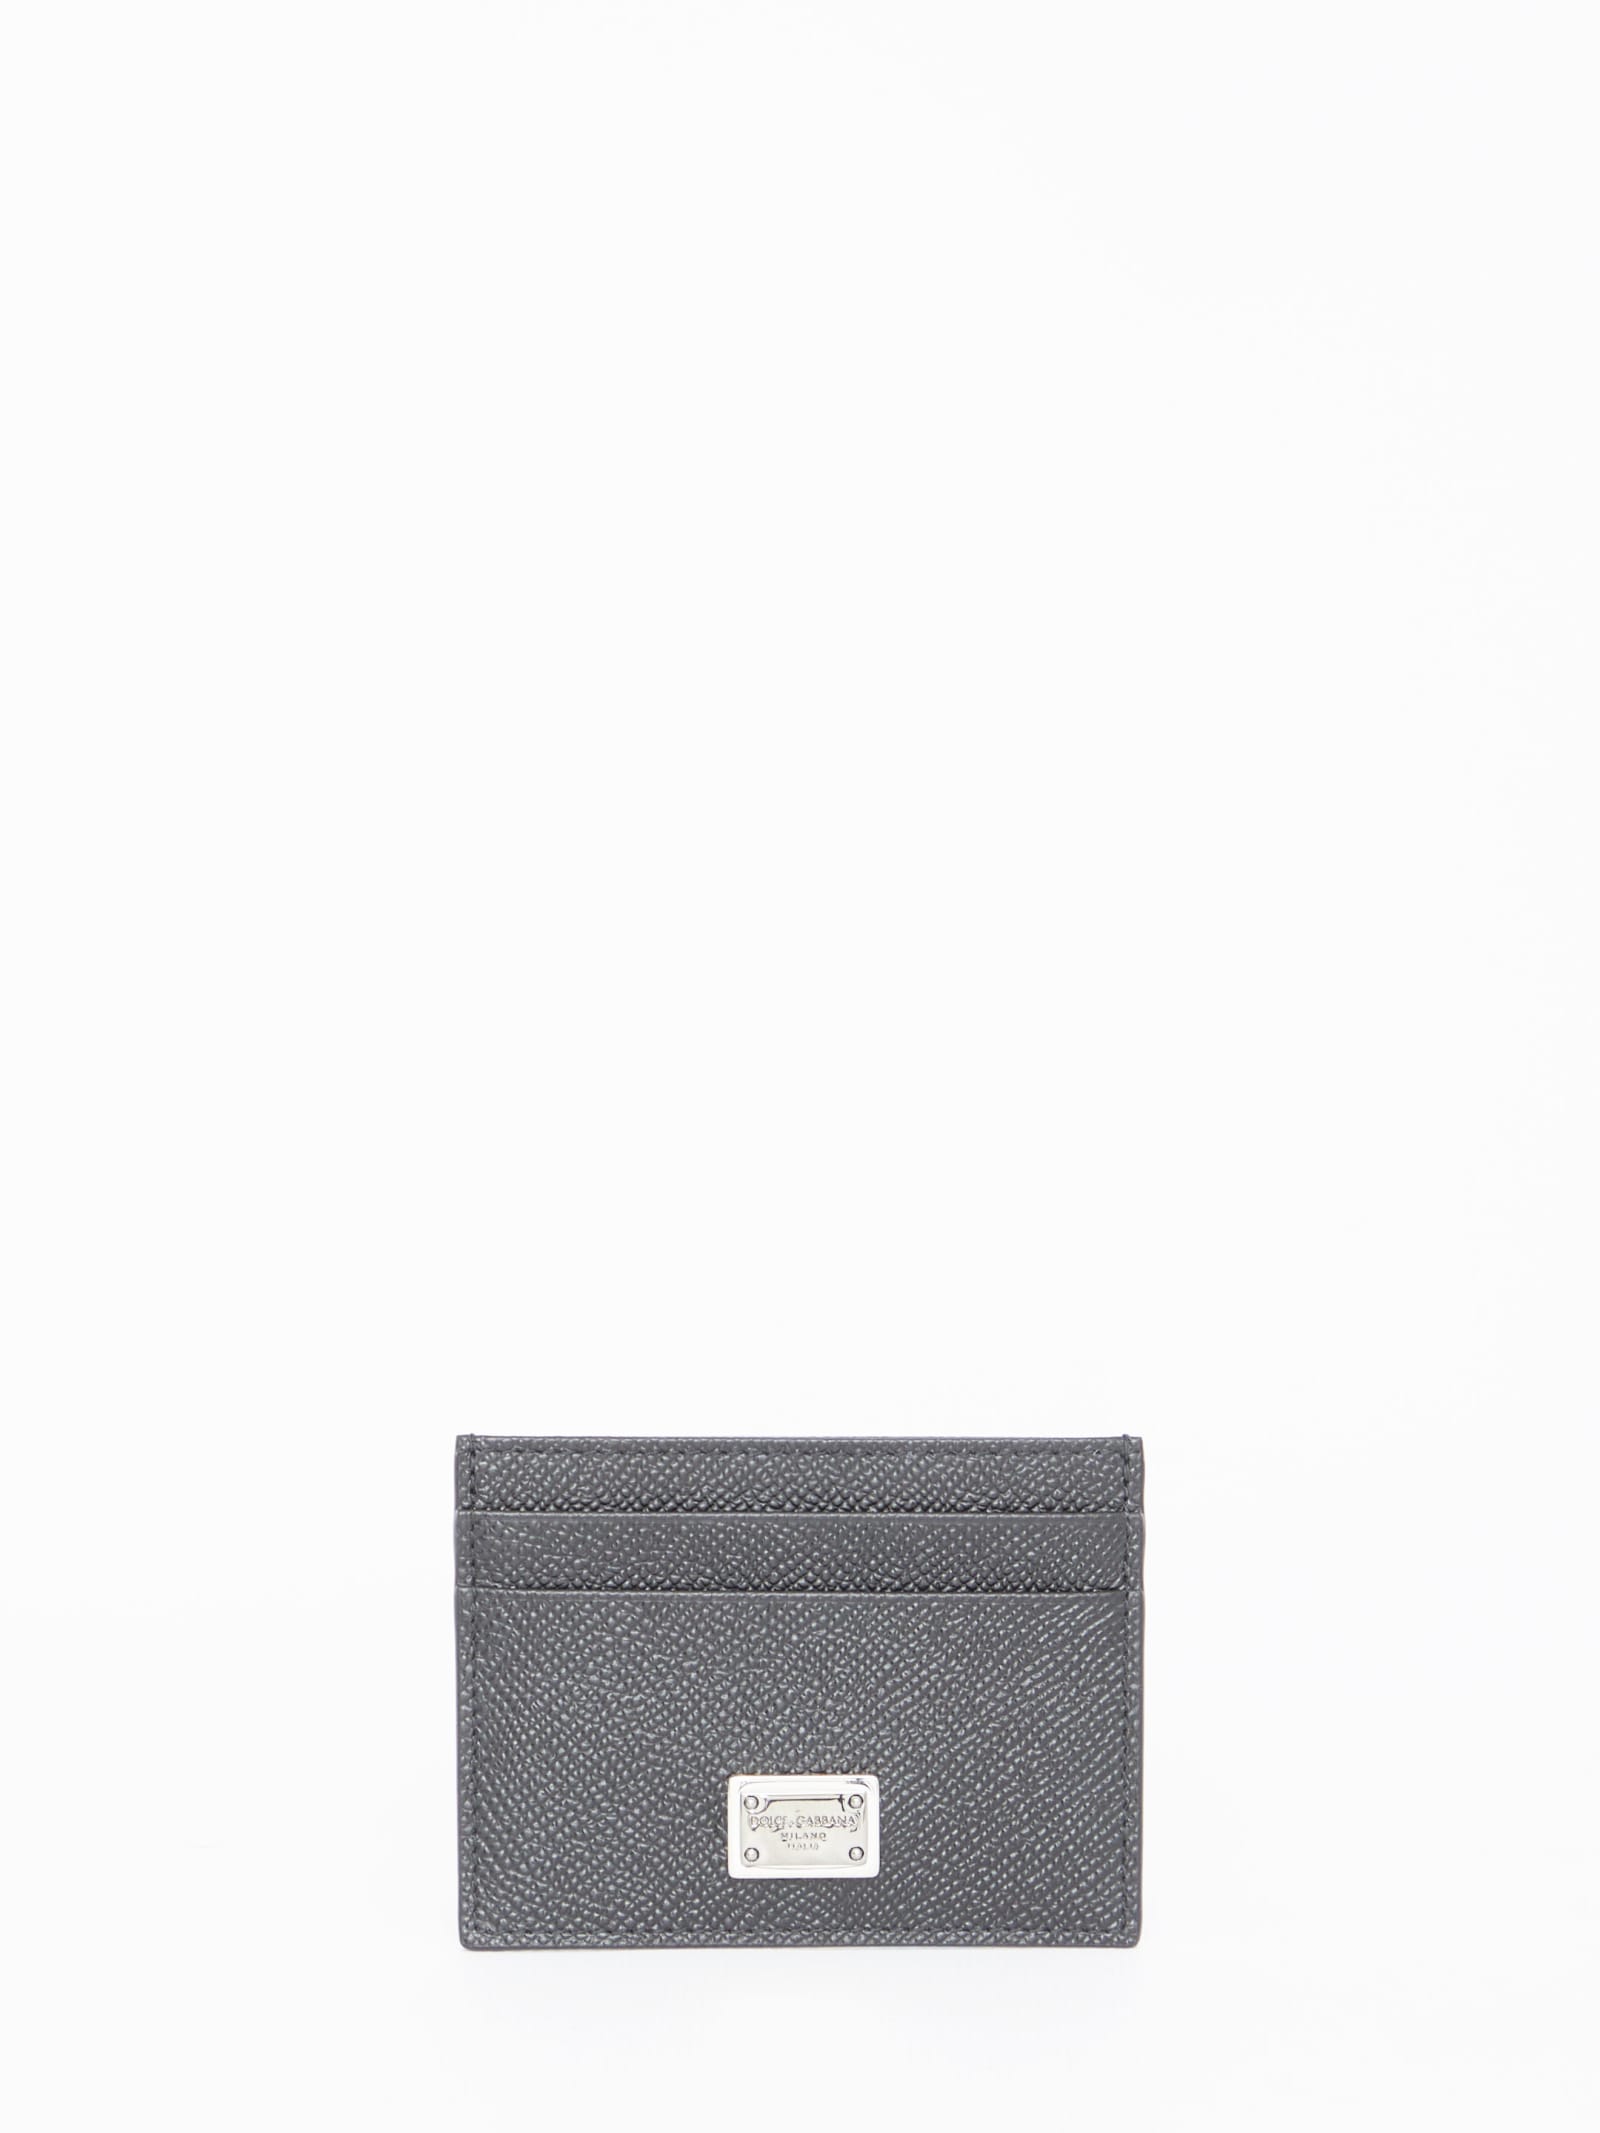 Dolce & Gabbana Leather Cardholder In Black